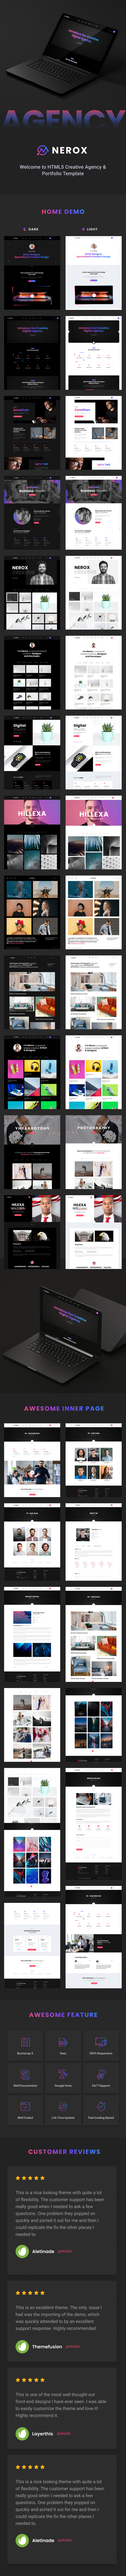 Nerox – Agency & Portfolio HTML Template